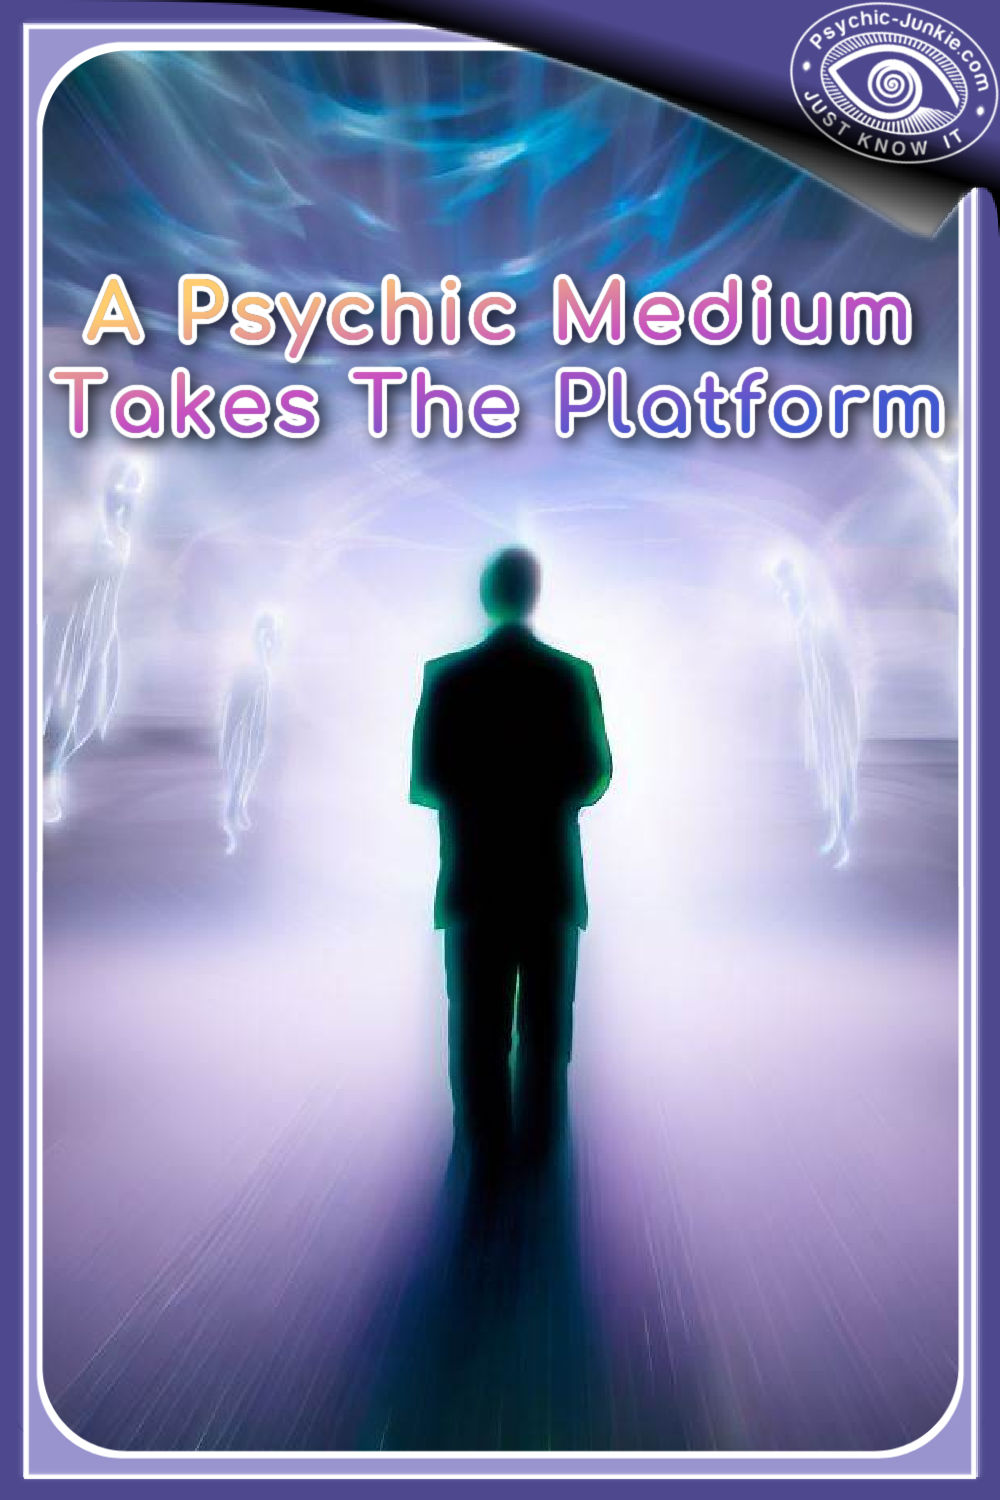 On The Platform With Psychic Jason McDonald